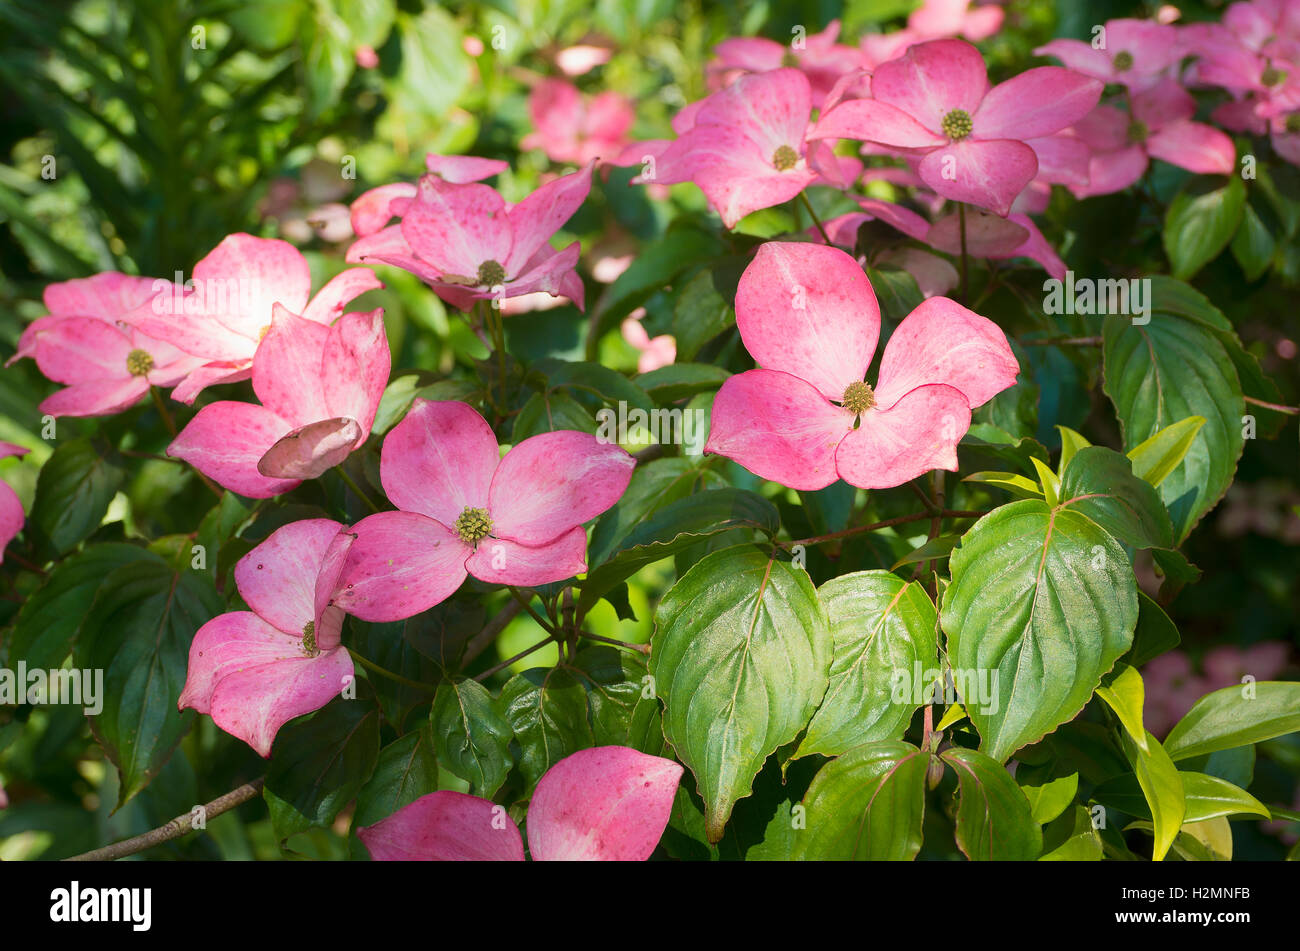 Pink bracts of Cornus kousa Miss Satomi Stock Photo